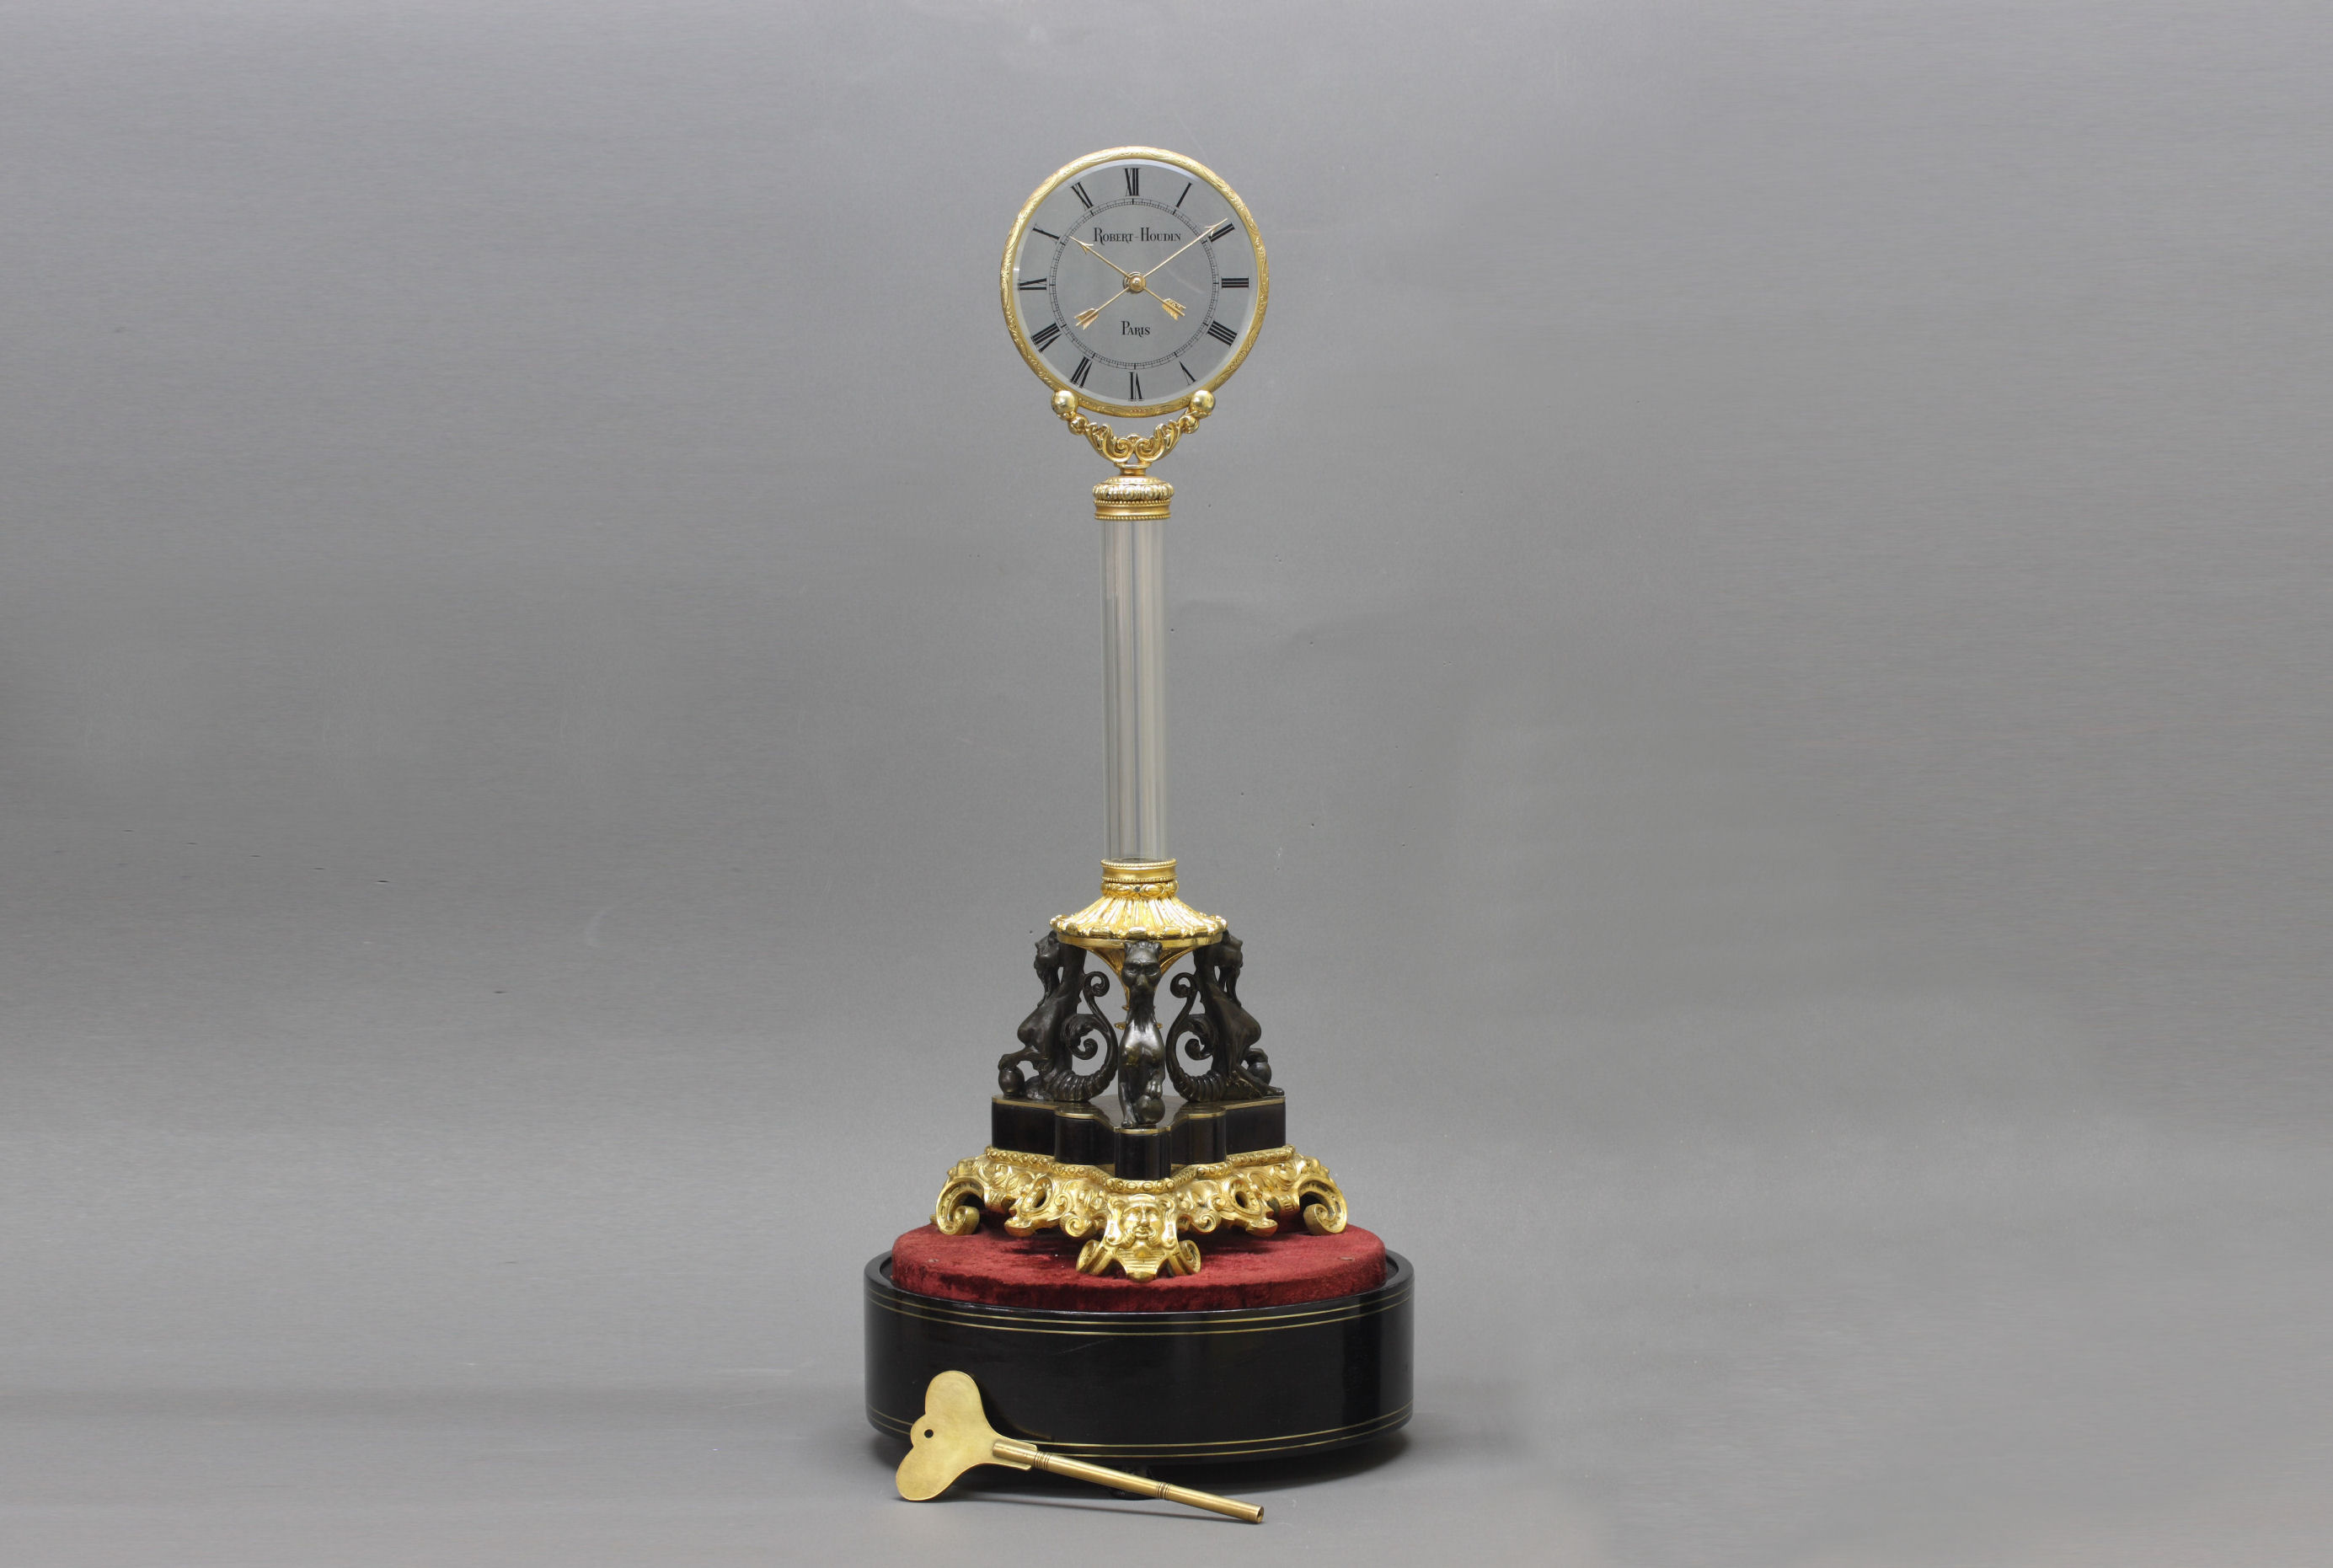 N 74 JACQUES NÈVE Horloger d Art - Uurwerkmaker + 32 (0)477 27 19 08 - jneve@horloger.net - www.horloger.net Jean Eugène ROBERT-HOUDIN (Blois, 1805 Saint-Gervais, 1871) KLOK MET DRIE MYSTERIES Parijs, omstreeks 1850.